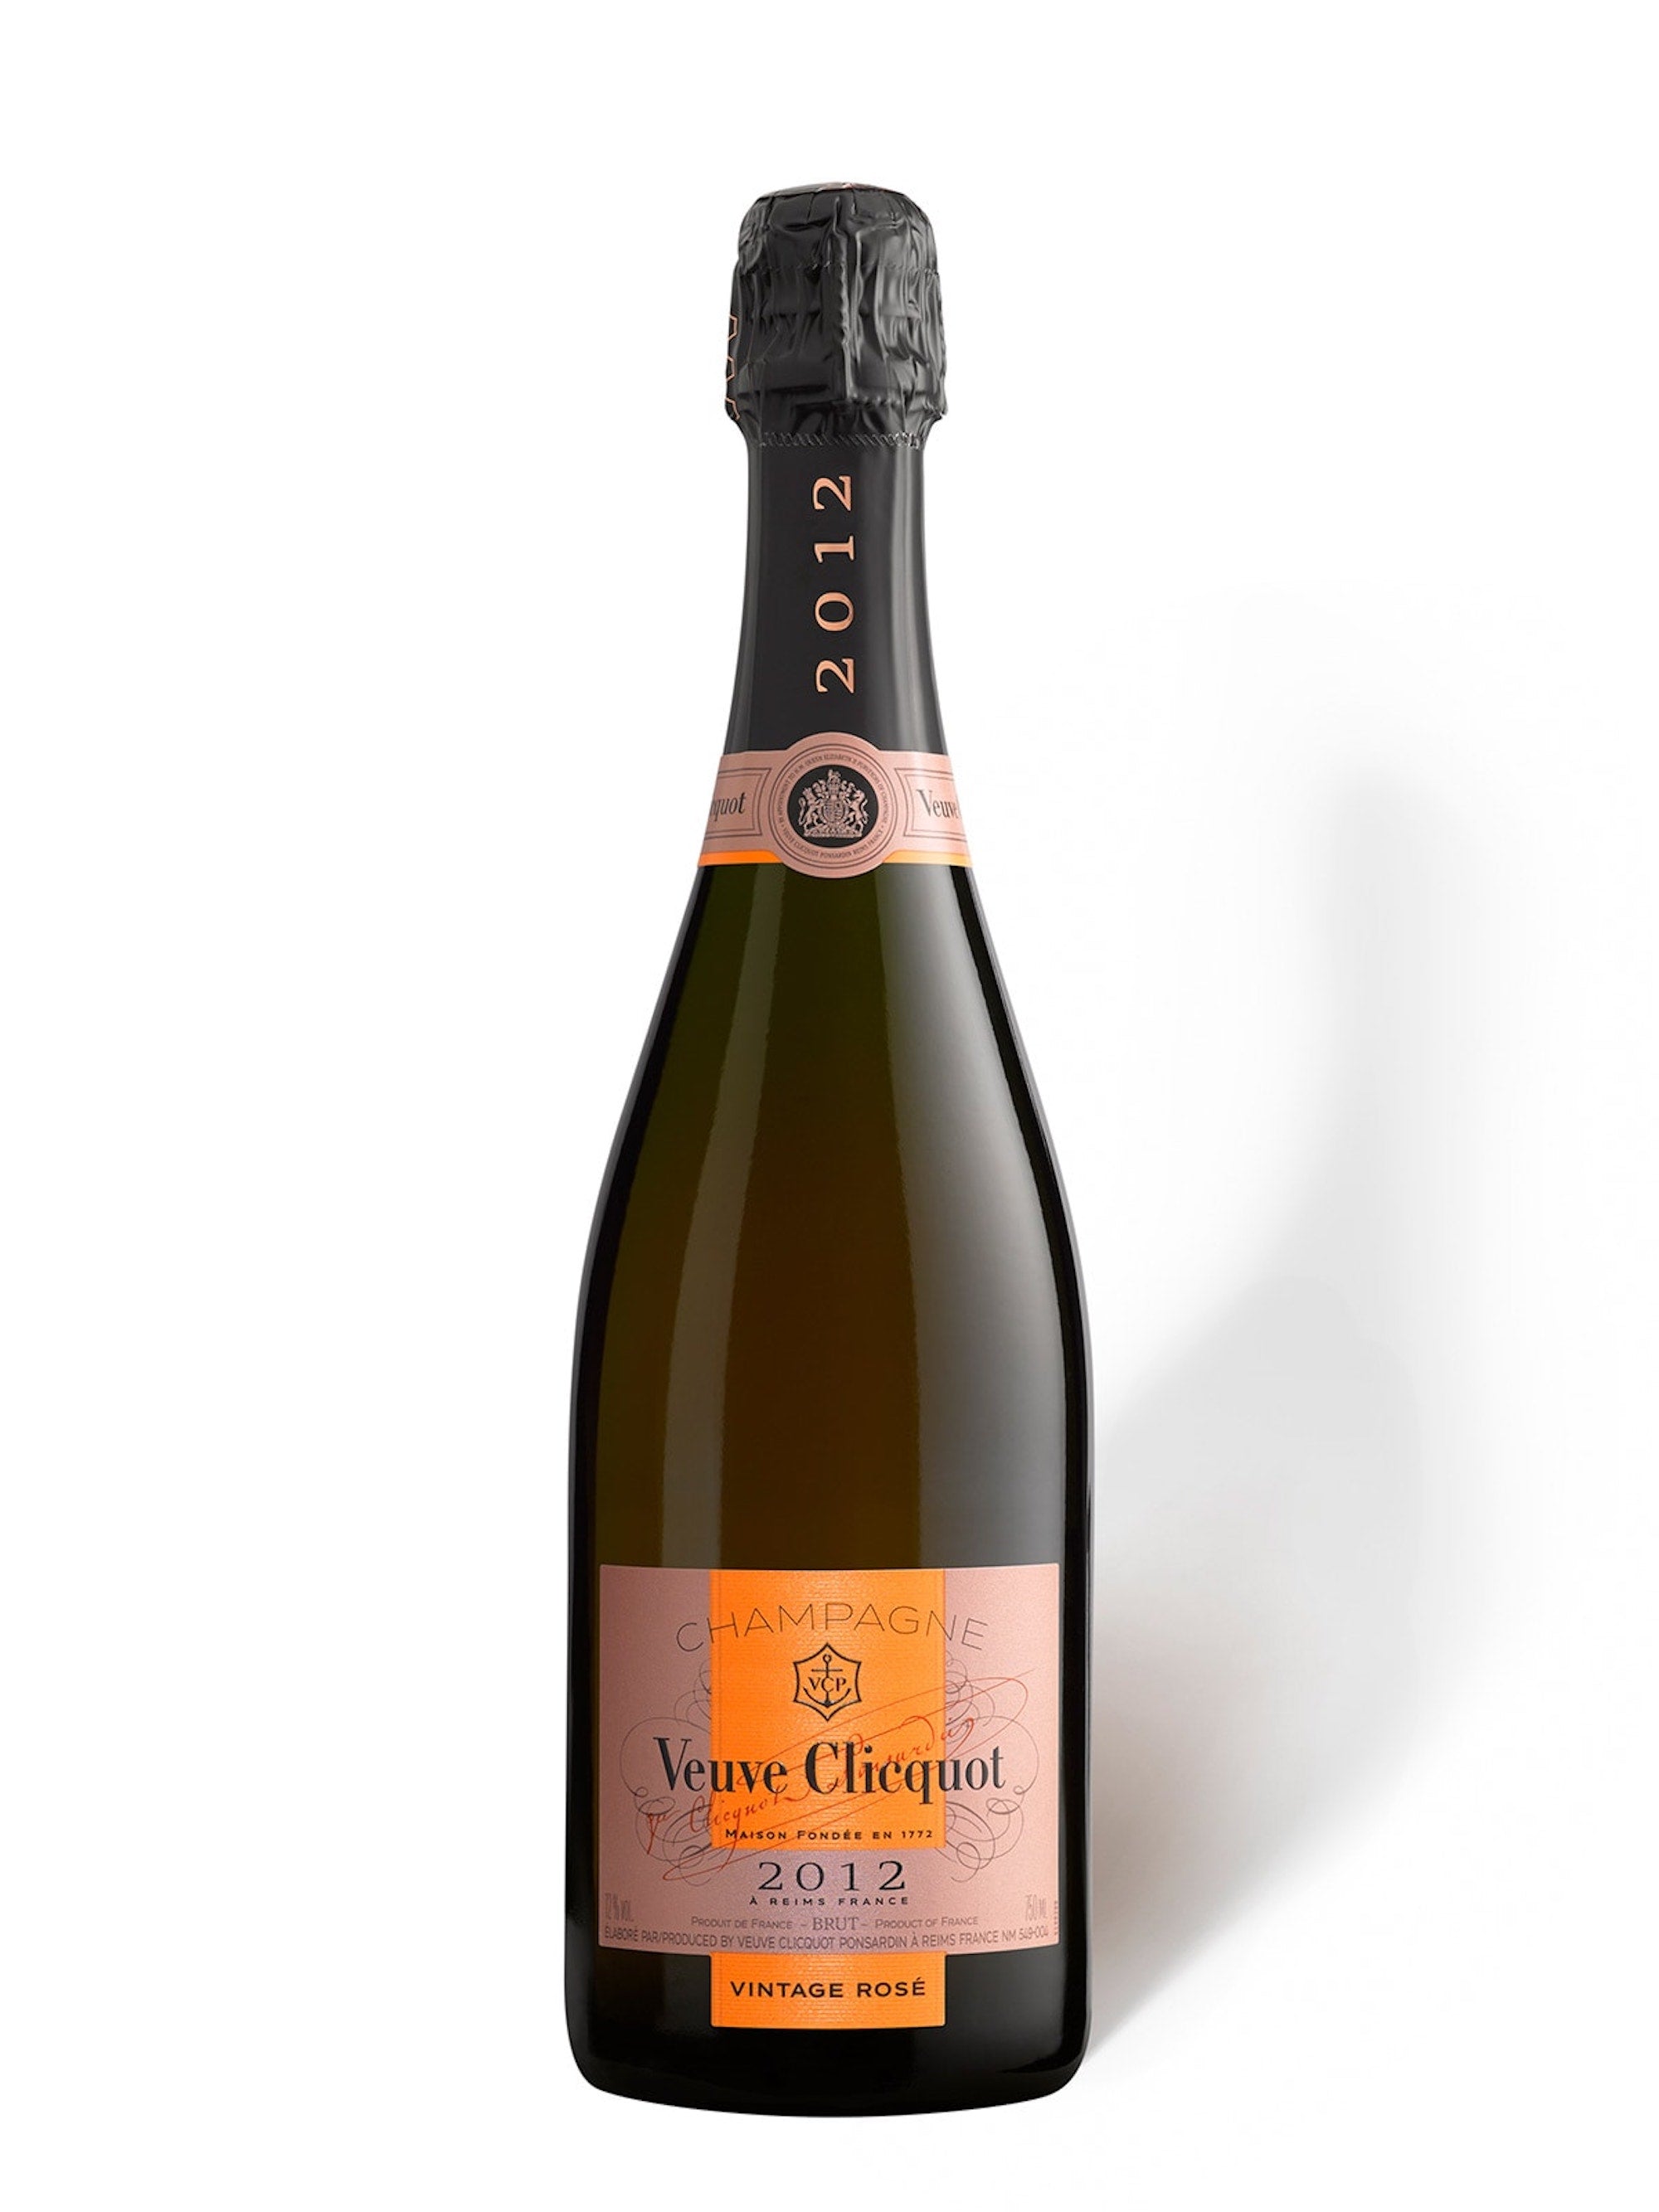 Veuve Clicquot newest champagne Clicquot Rich